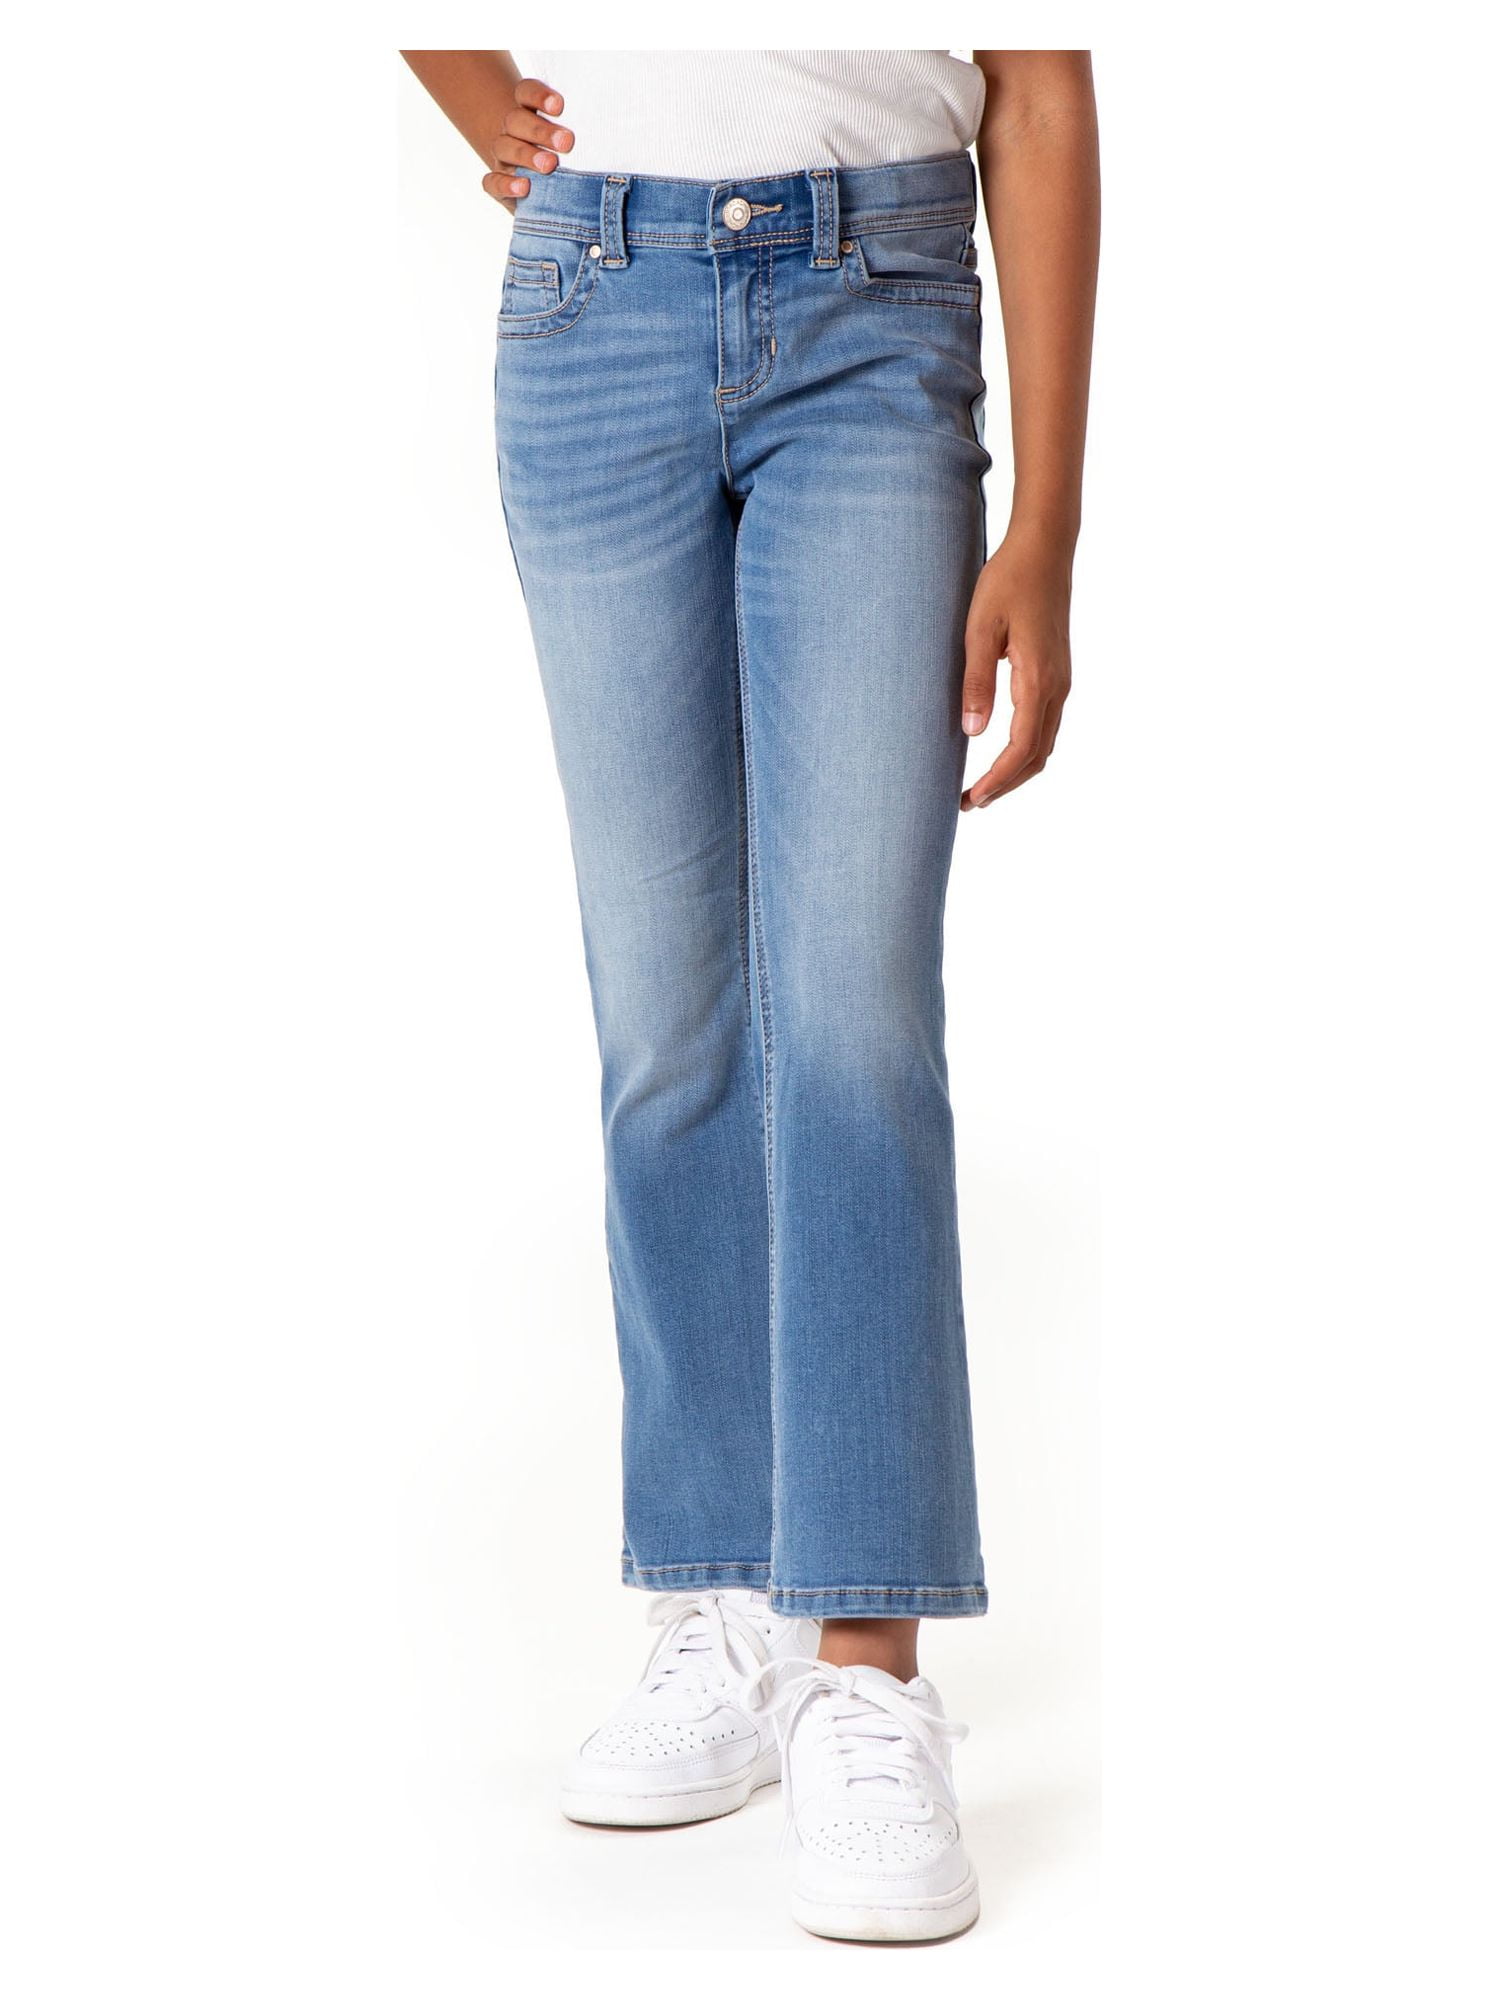 Jordache Girls Bootcut Jeans, Sizes 5-18 & Plus - Walmart.com